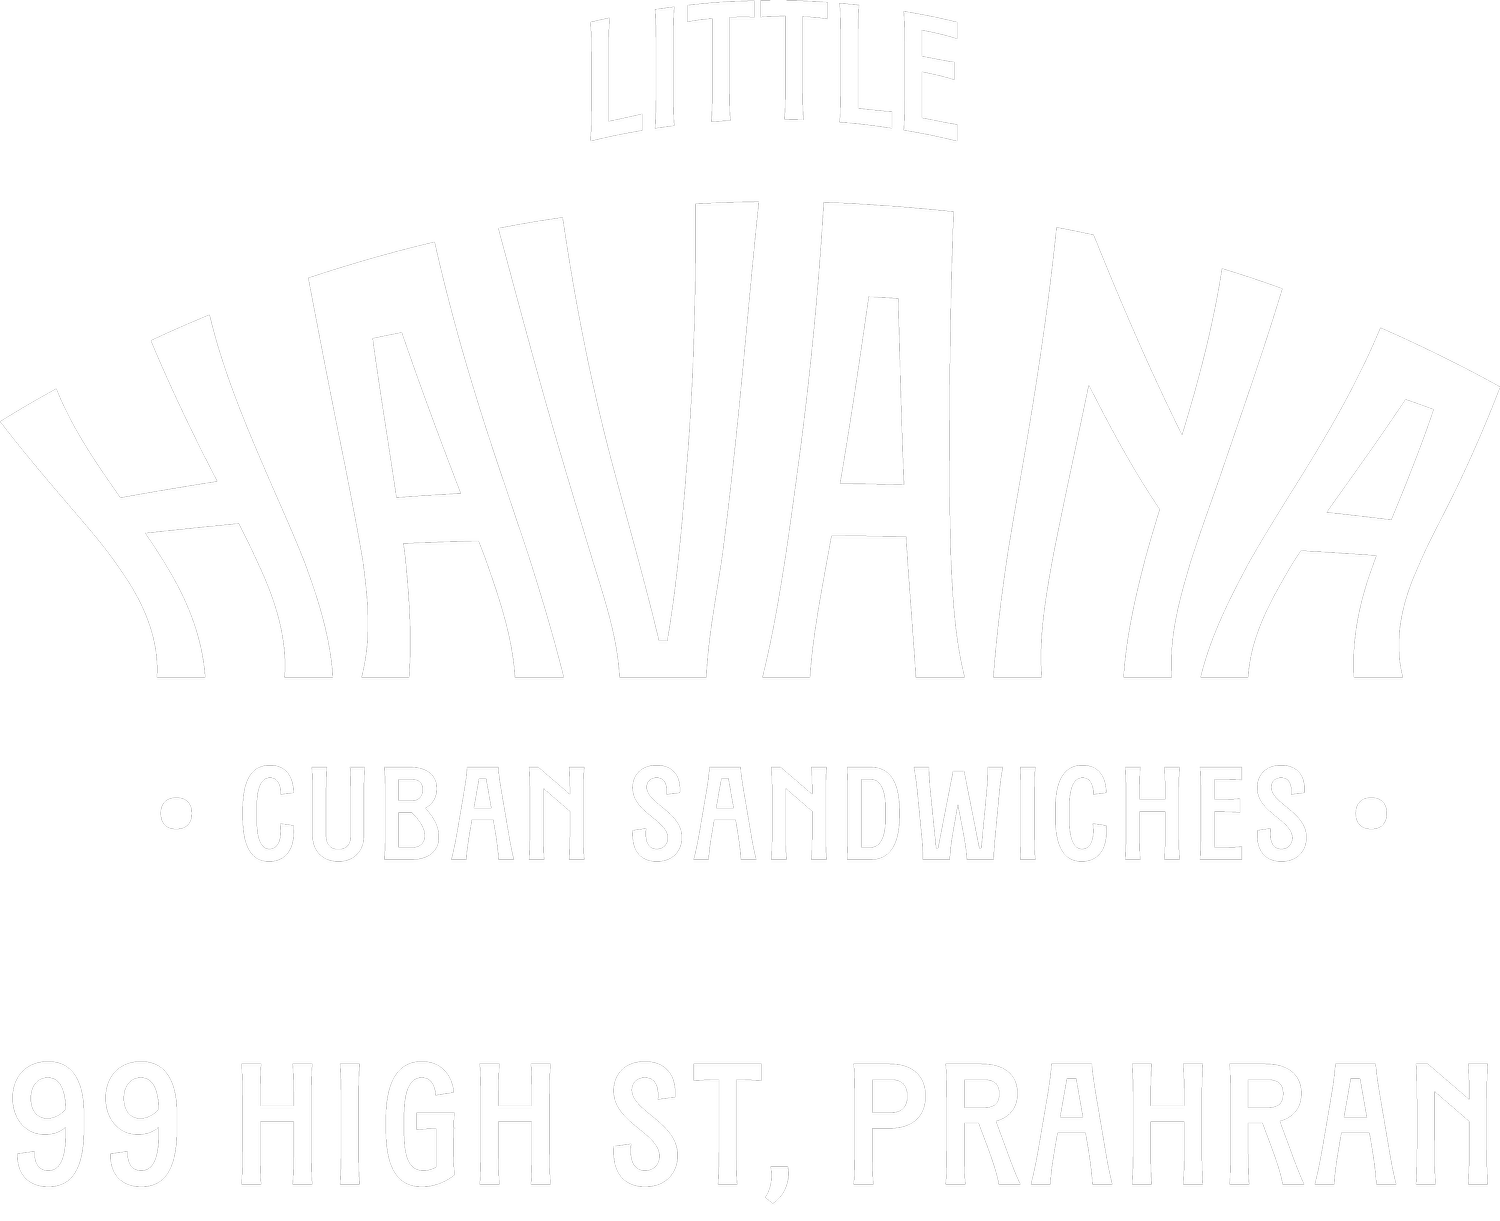 Little Havana Sandwiches